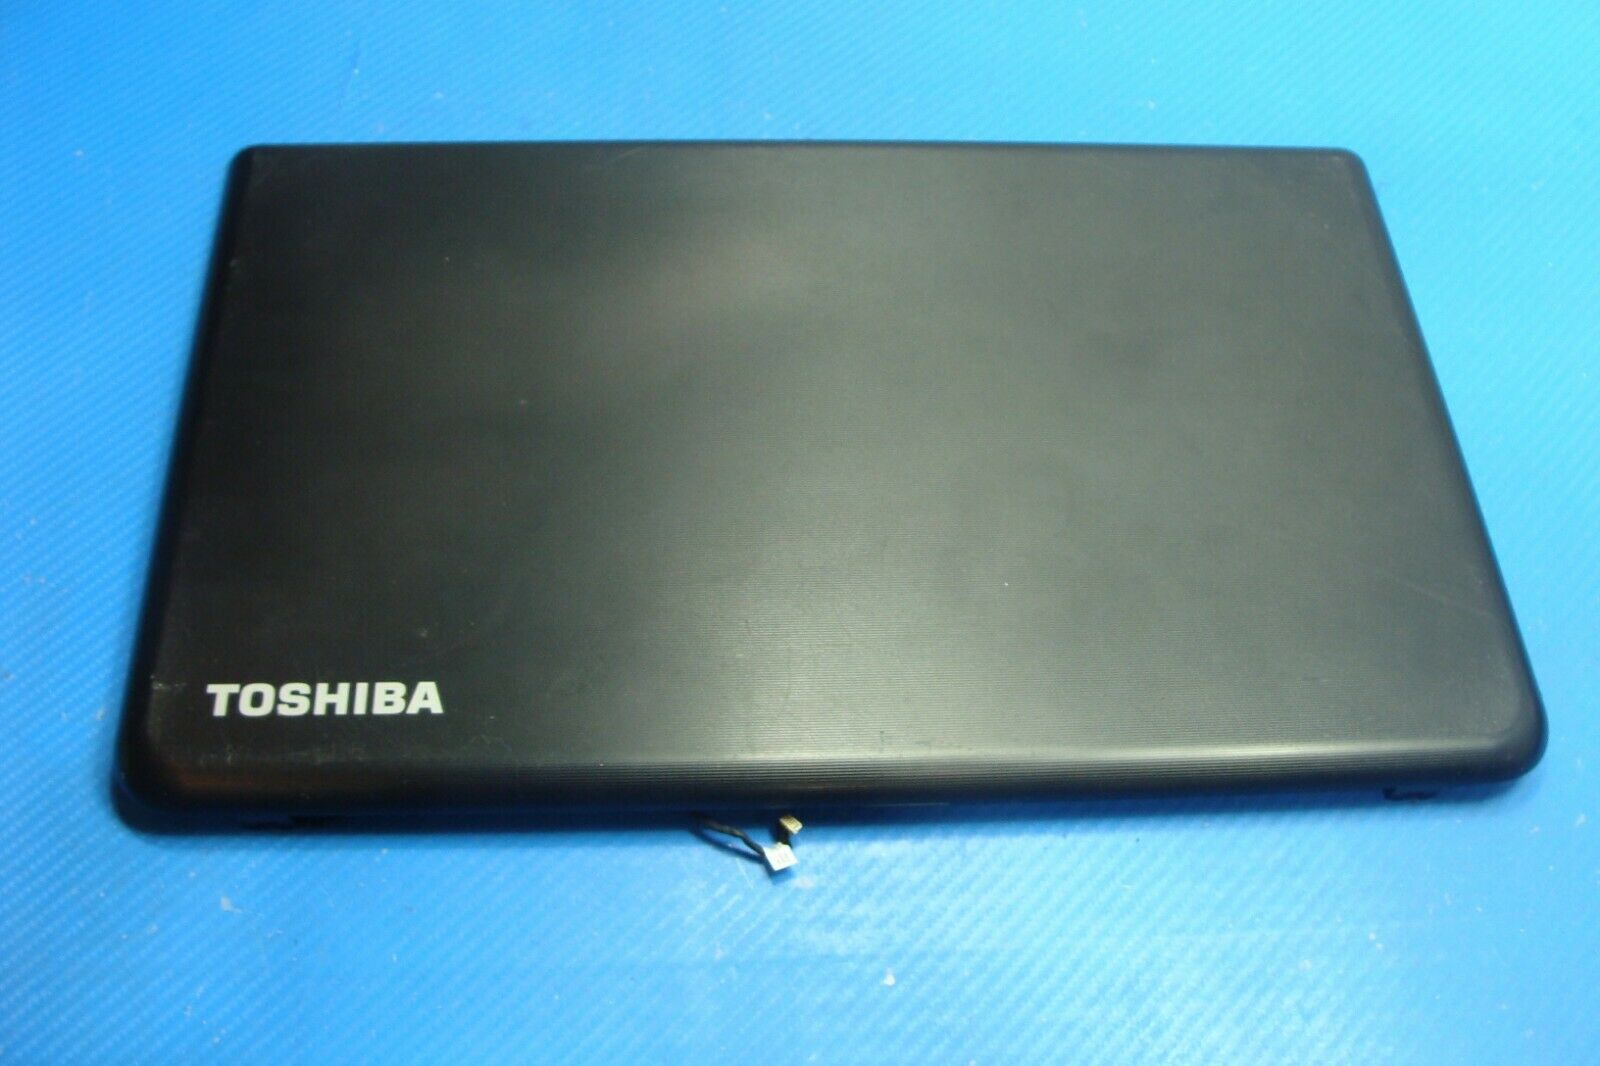 Toshiba Satellite C55t-Series 15.6